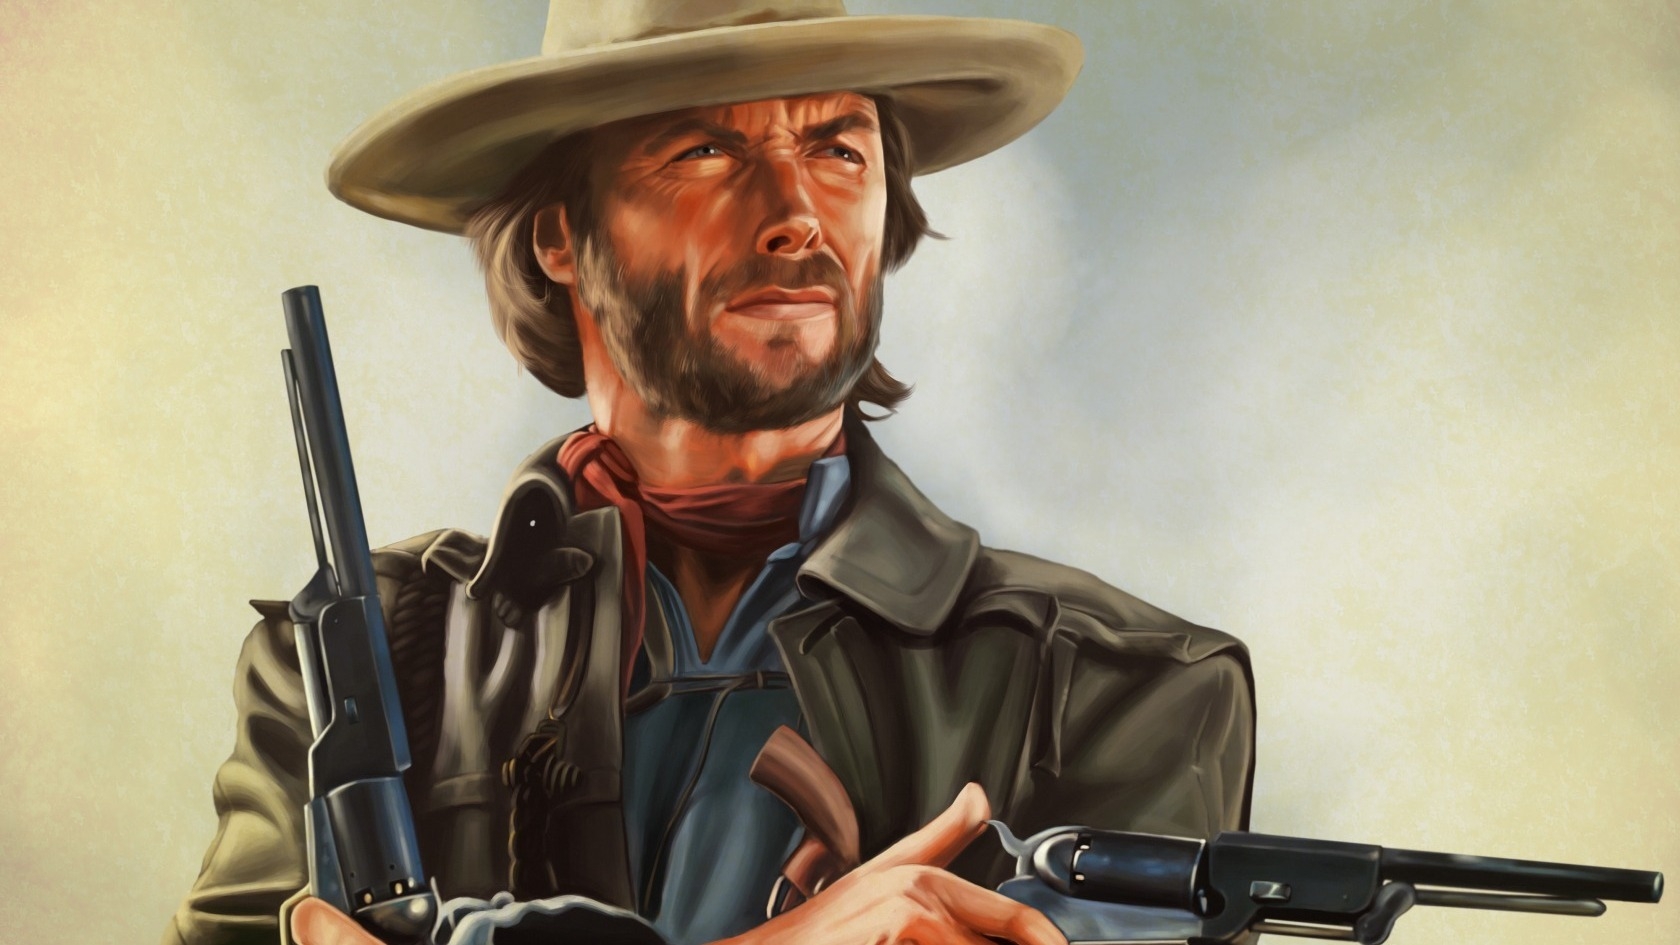 Clint Eastwood Artwork for 1680 x 945 HDTV resolution